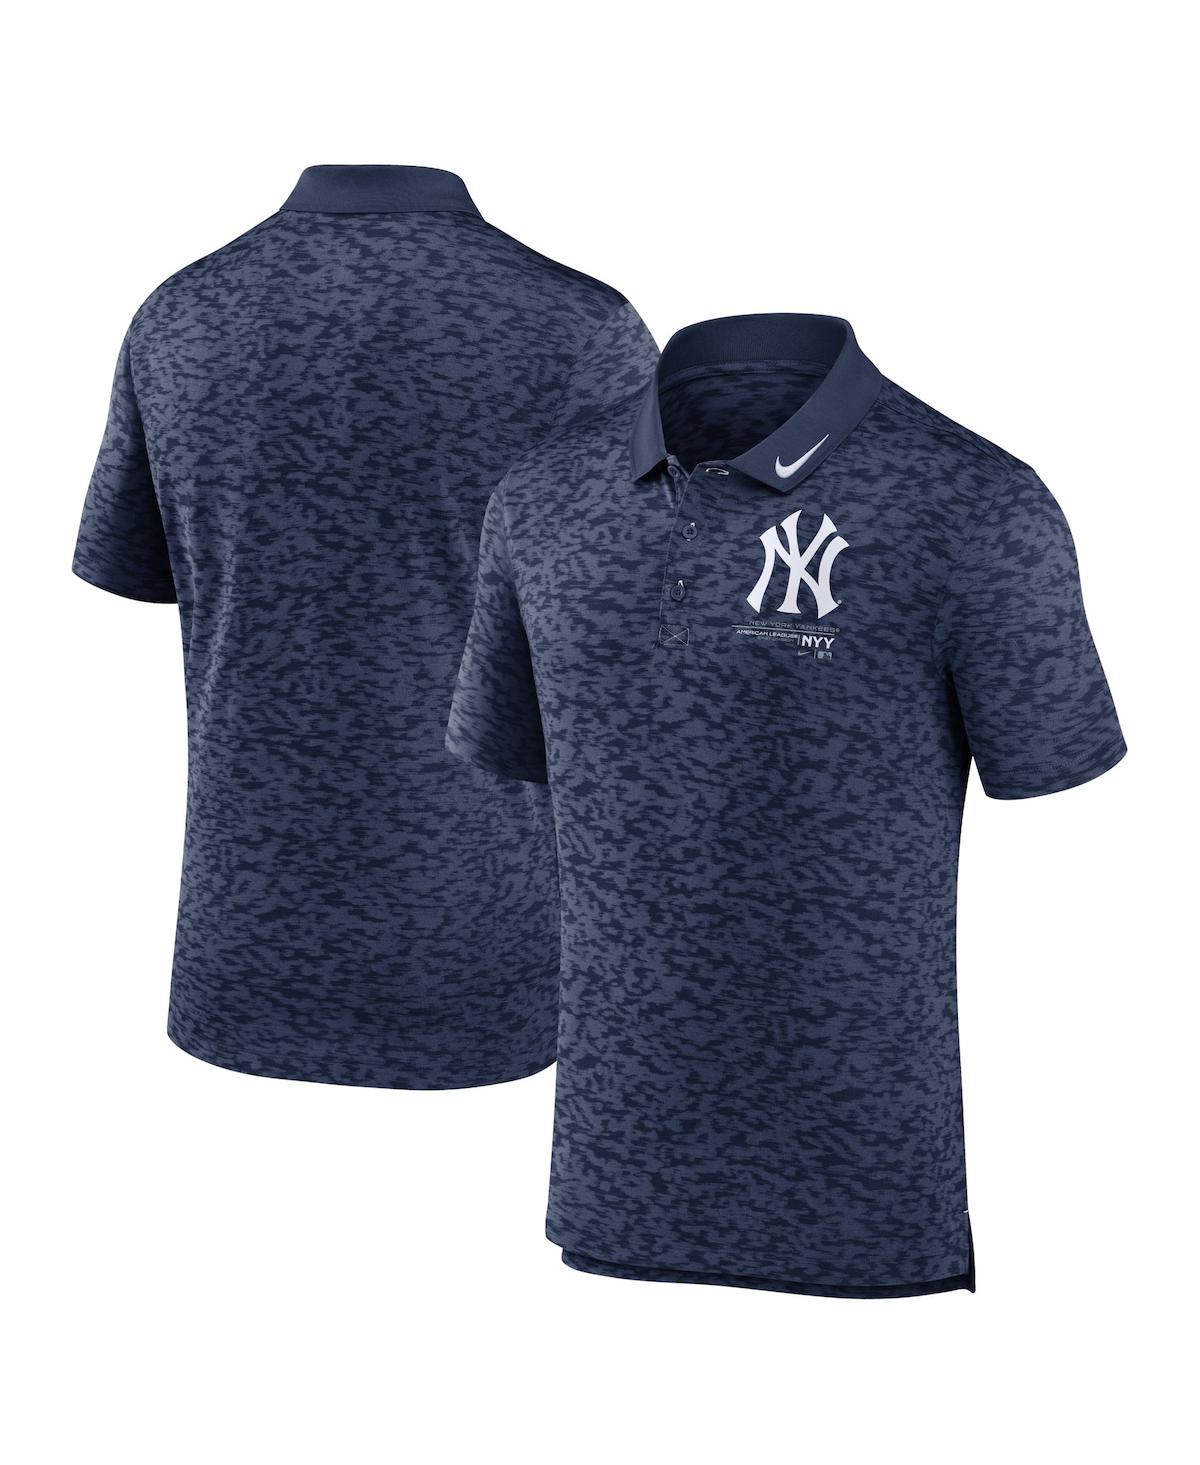 Men's Nike Navy New York Yankees Next Level Polo Shirt - Navy